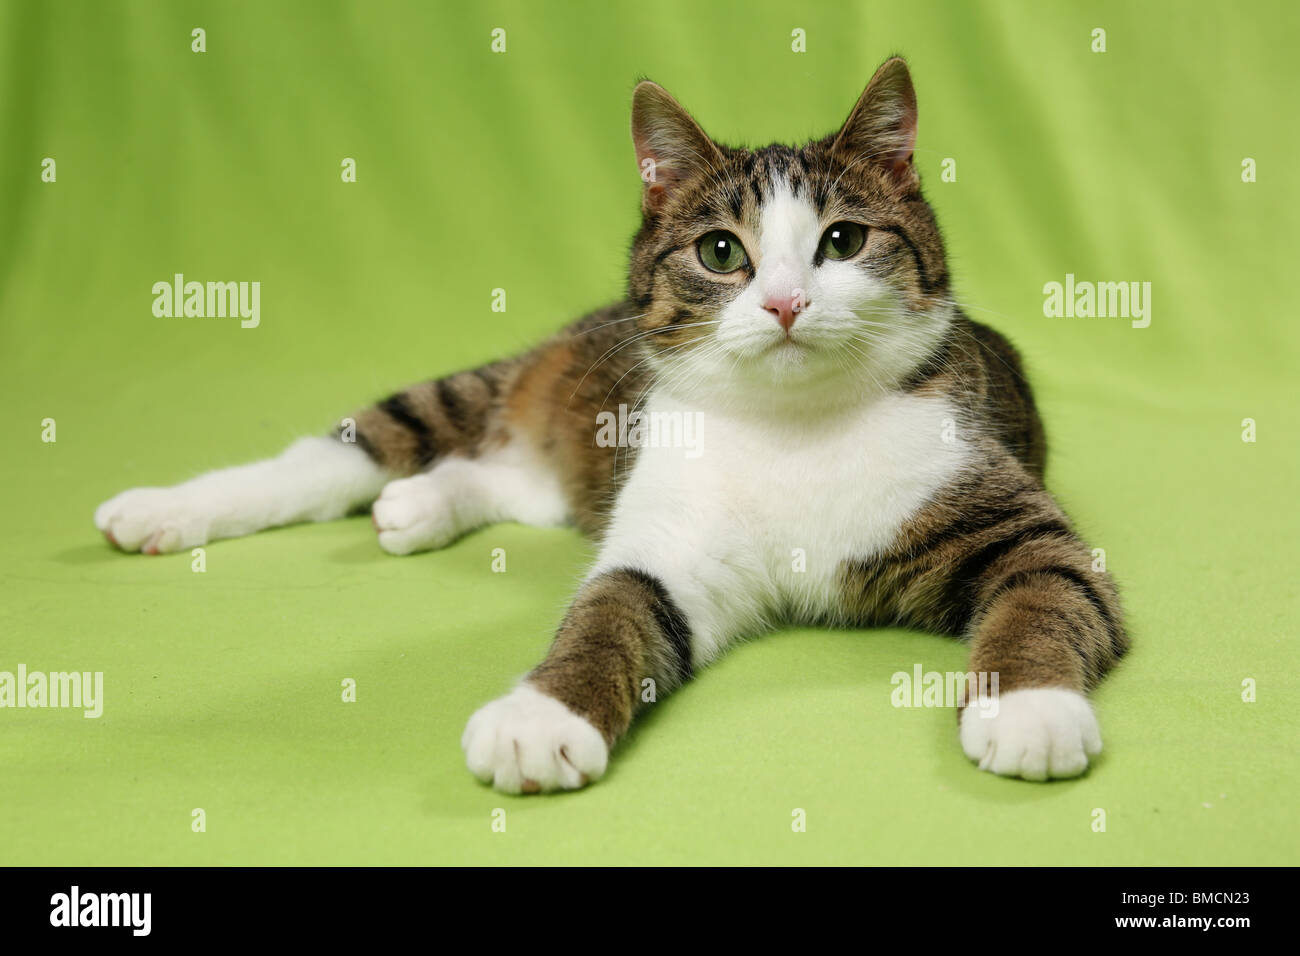 liegende Katze / lying cat Stock Photo